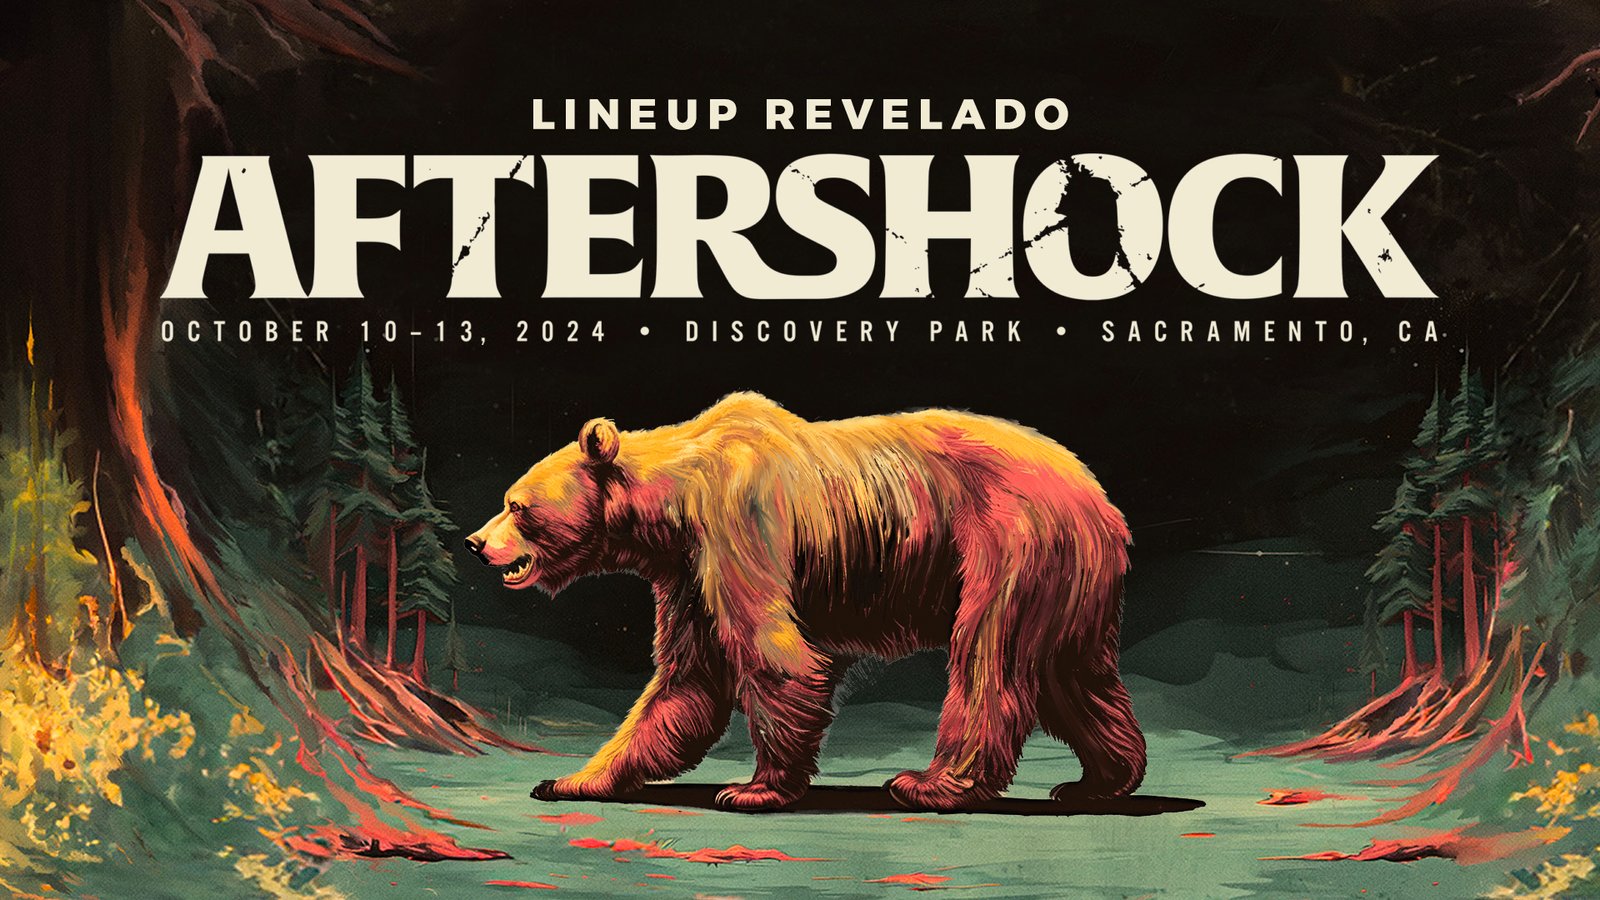 Aftershock Festival revela lineup 2024 con Slayer, Slipknot, Mötley